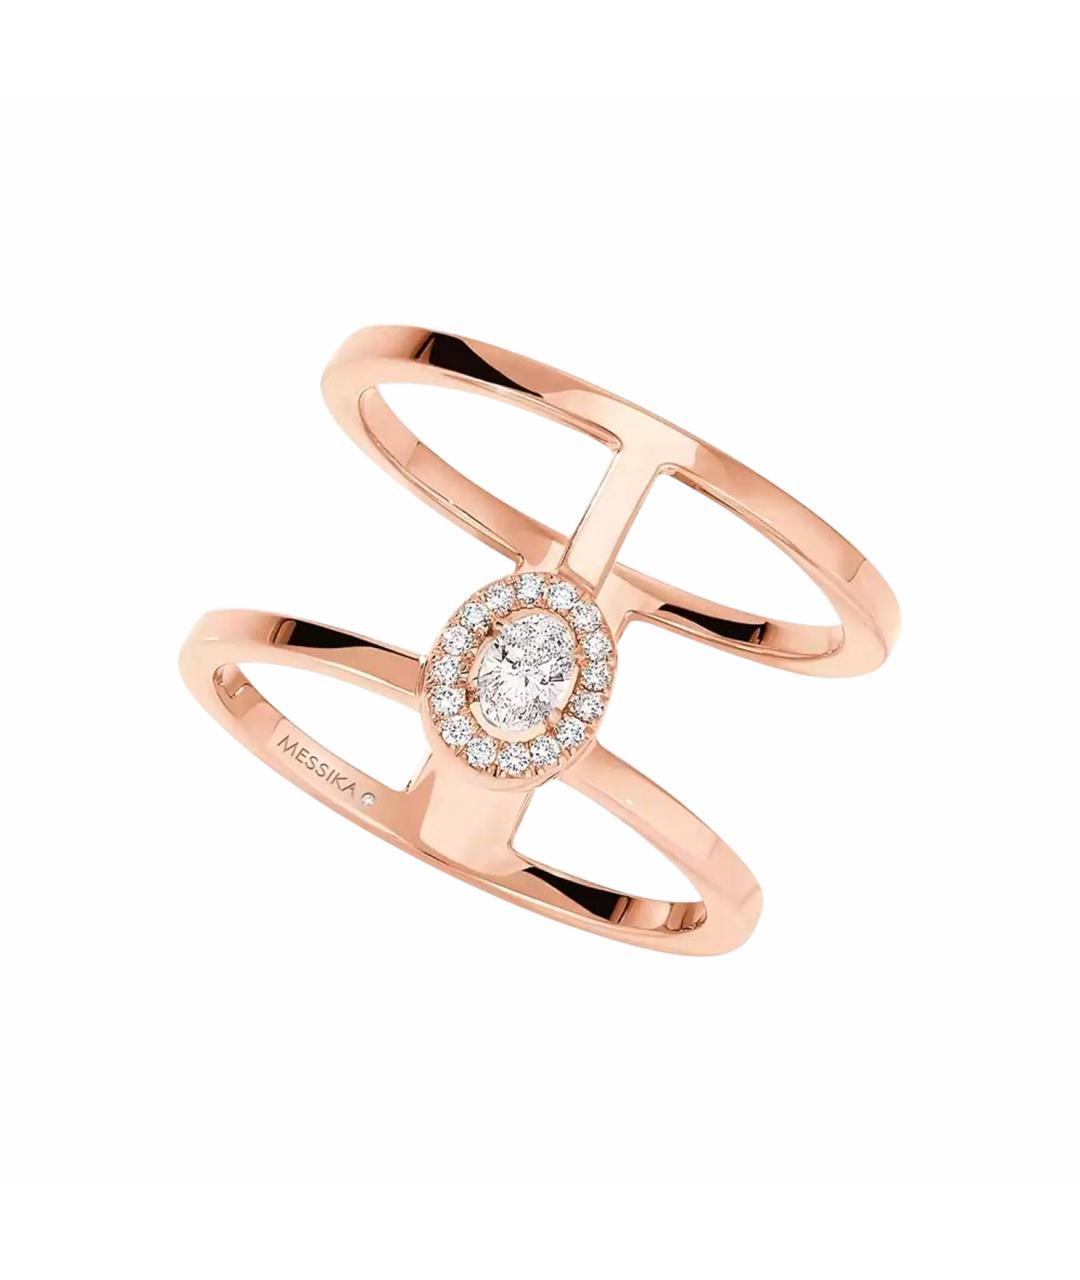 MESSIKA Золотое кольцо из розового золота, фото 1